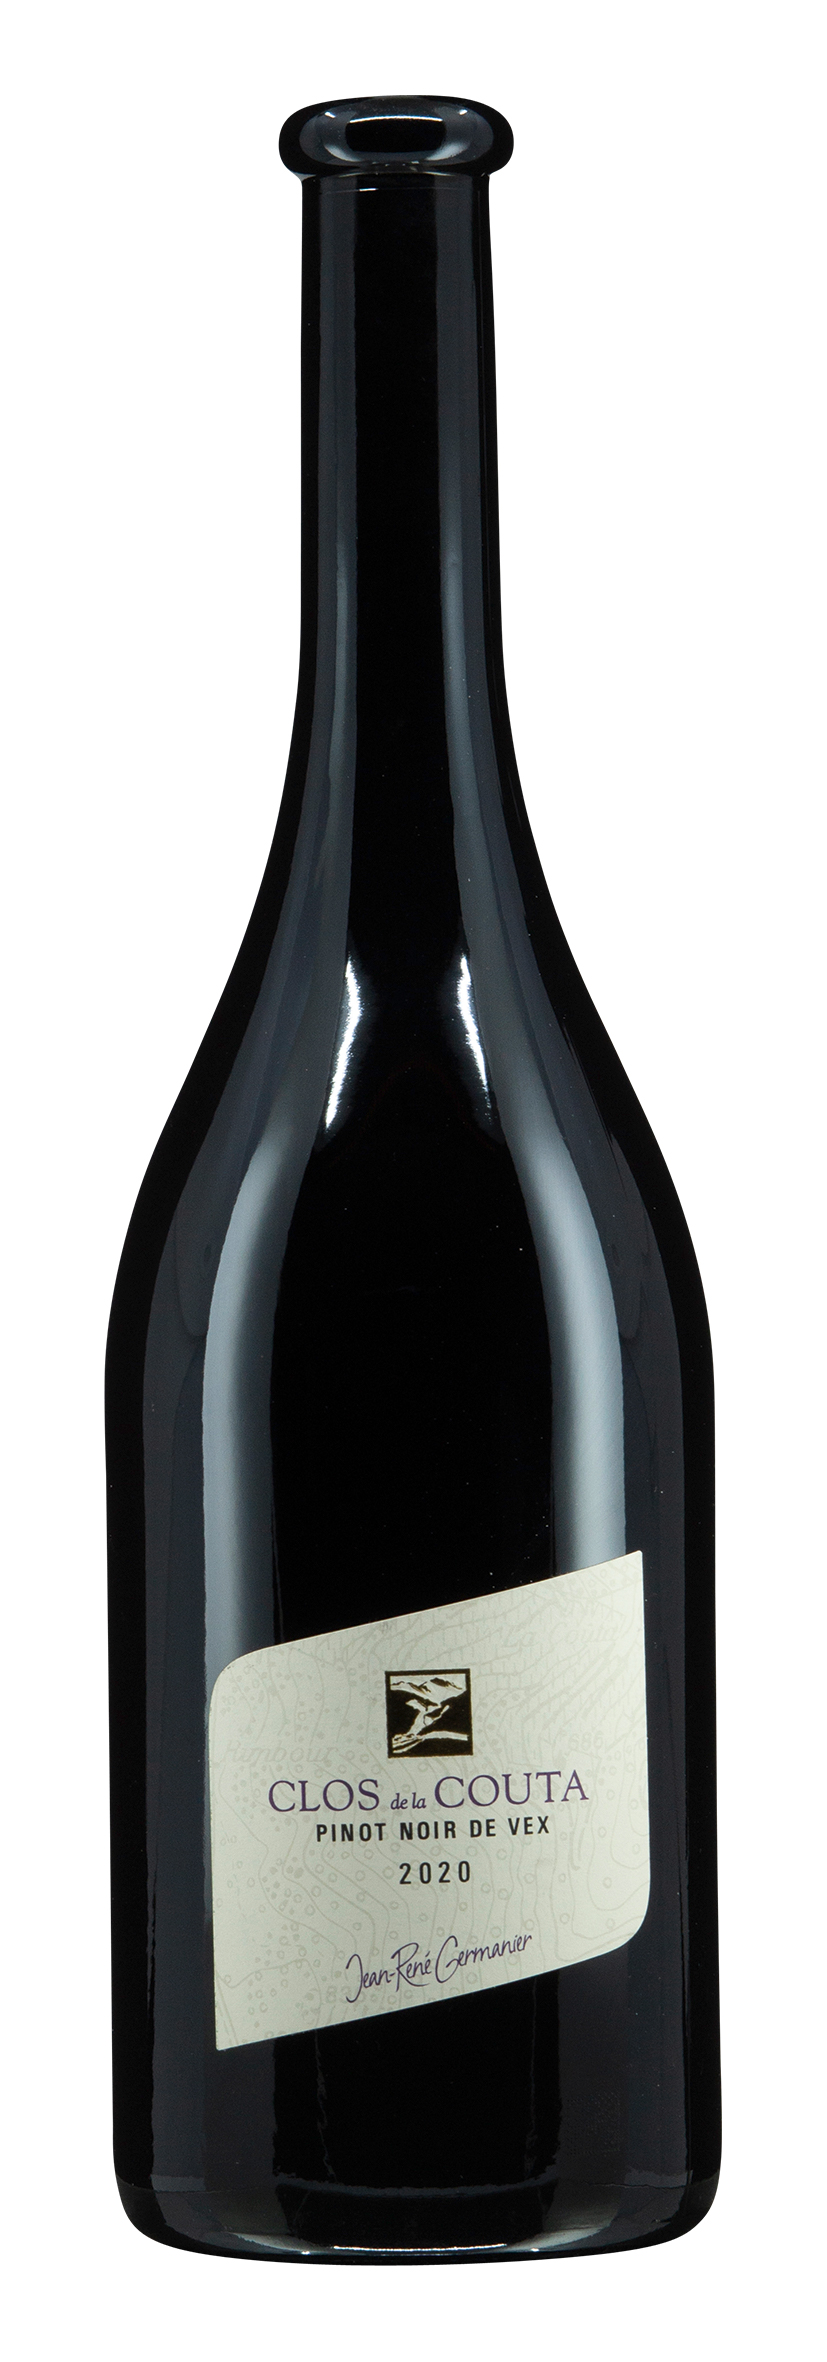 Valais AOC Clos de la Couta Pinot Noir de Vex 2020